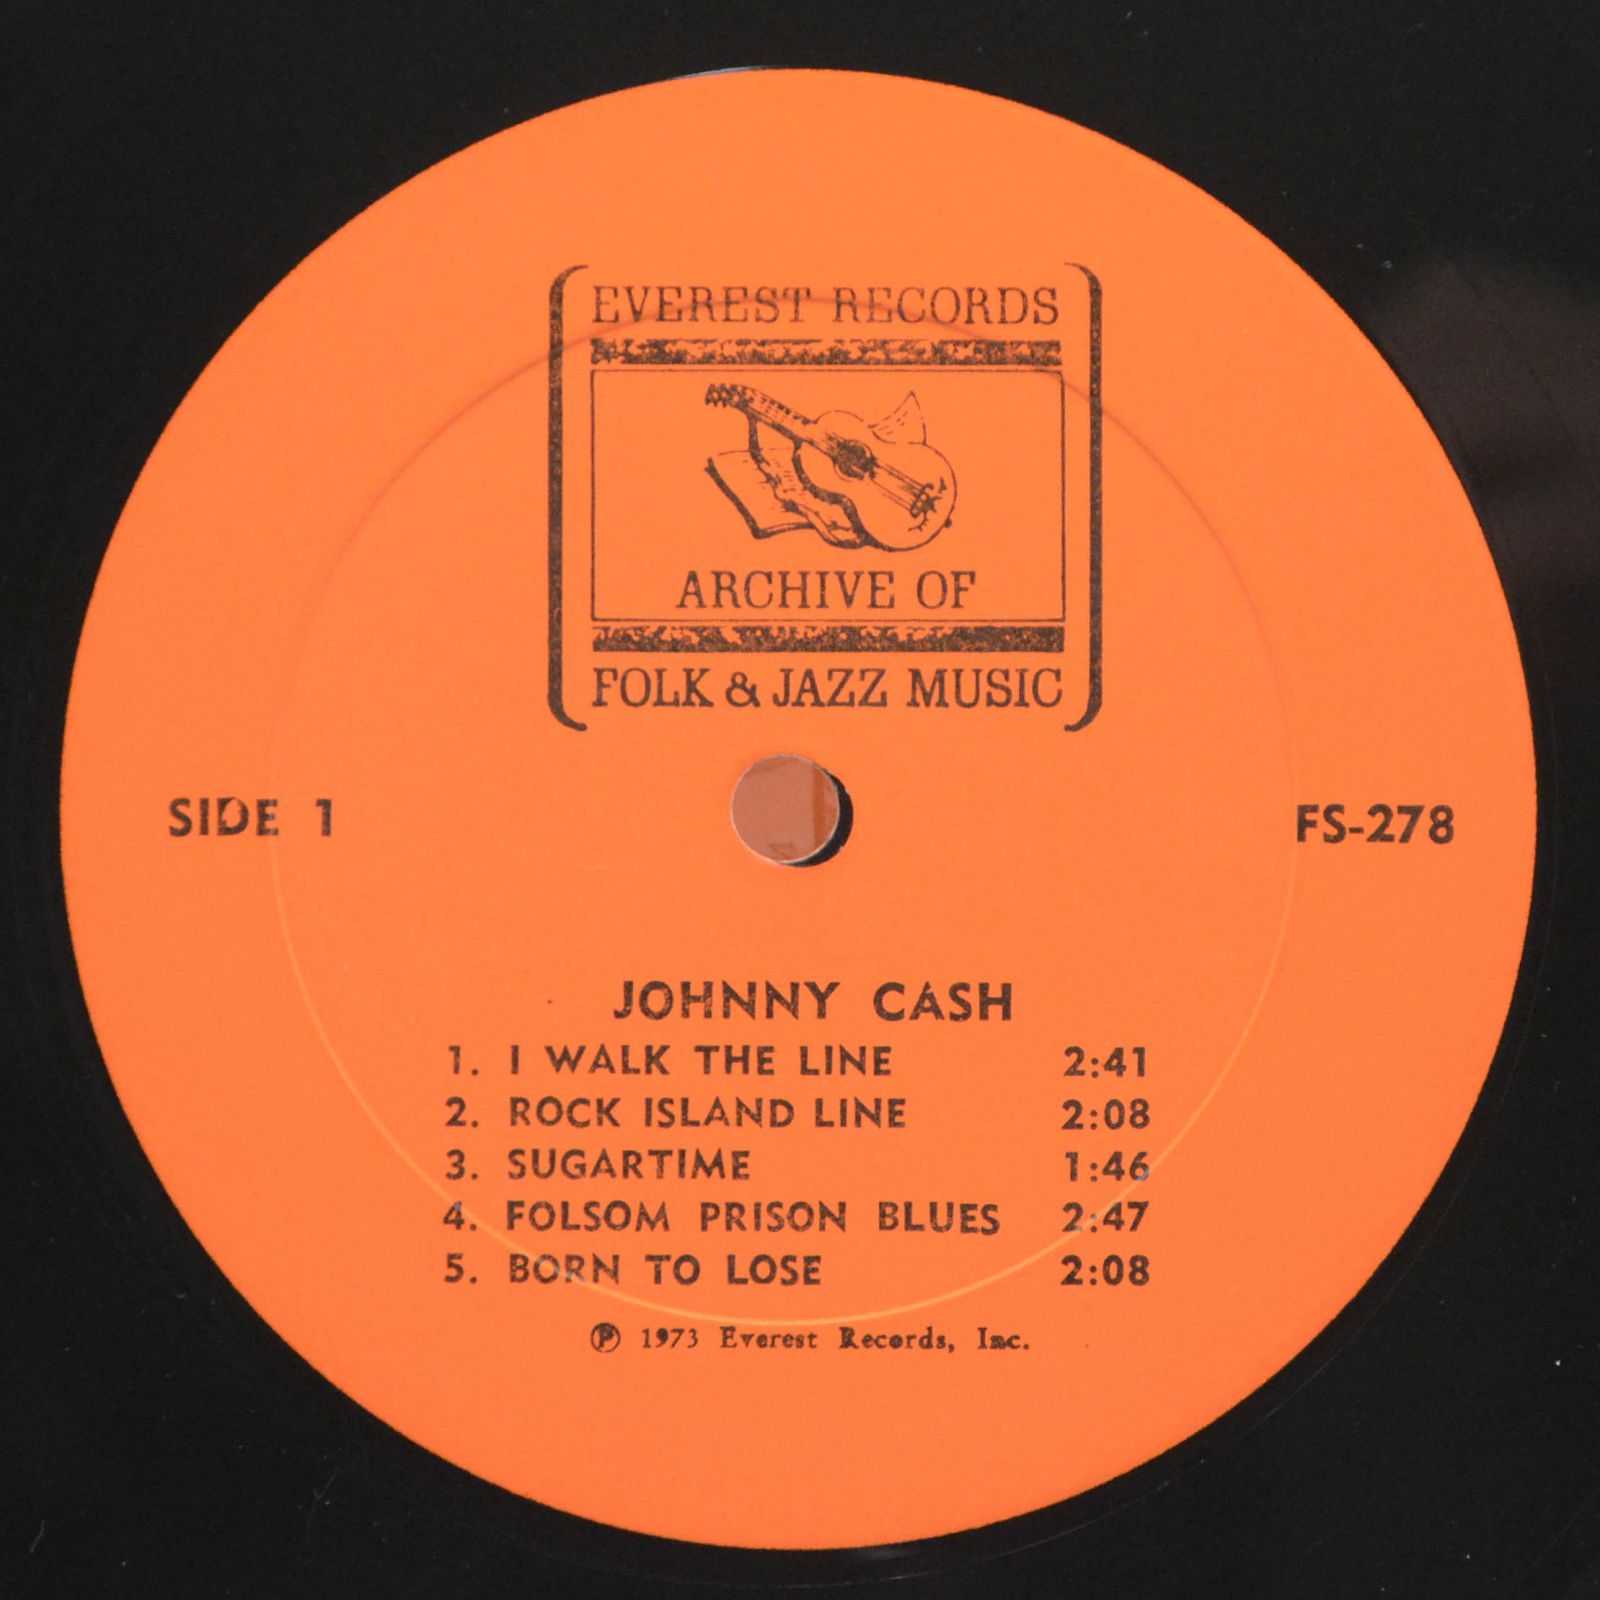 Johnny Cash — Johnny Cash, 1973